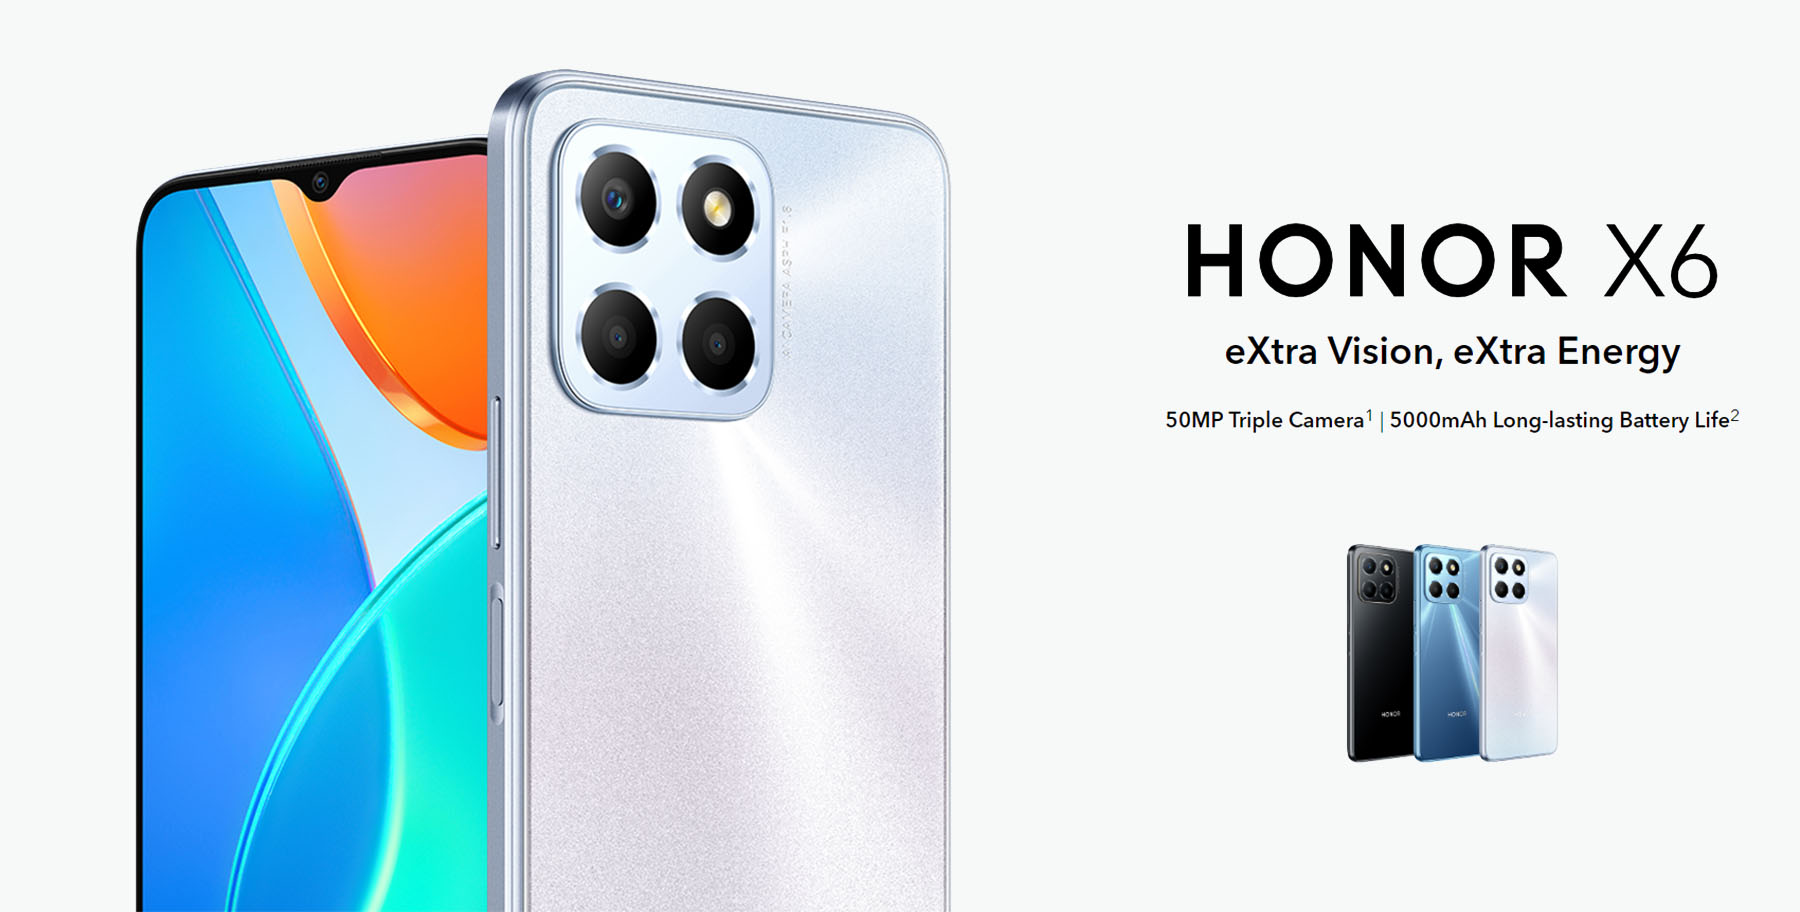 HONOR X6 smartphone